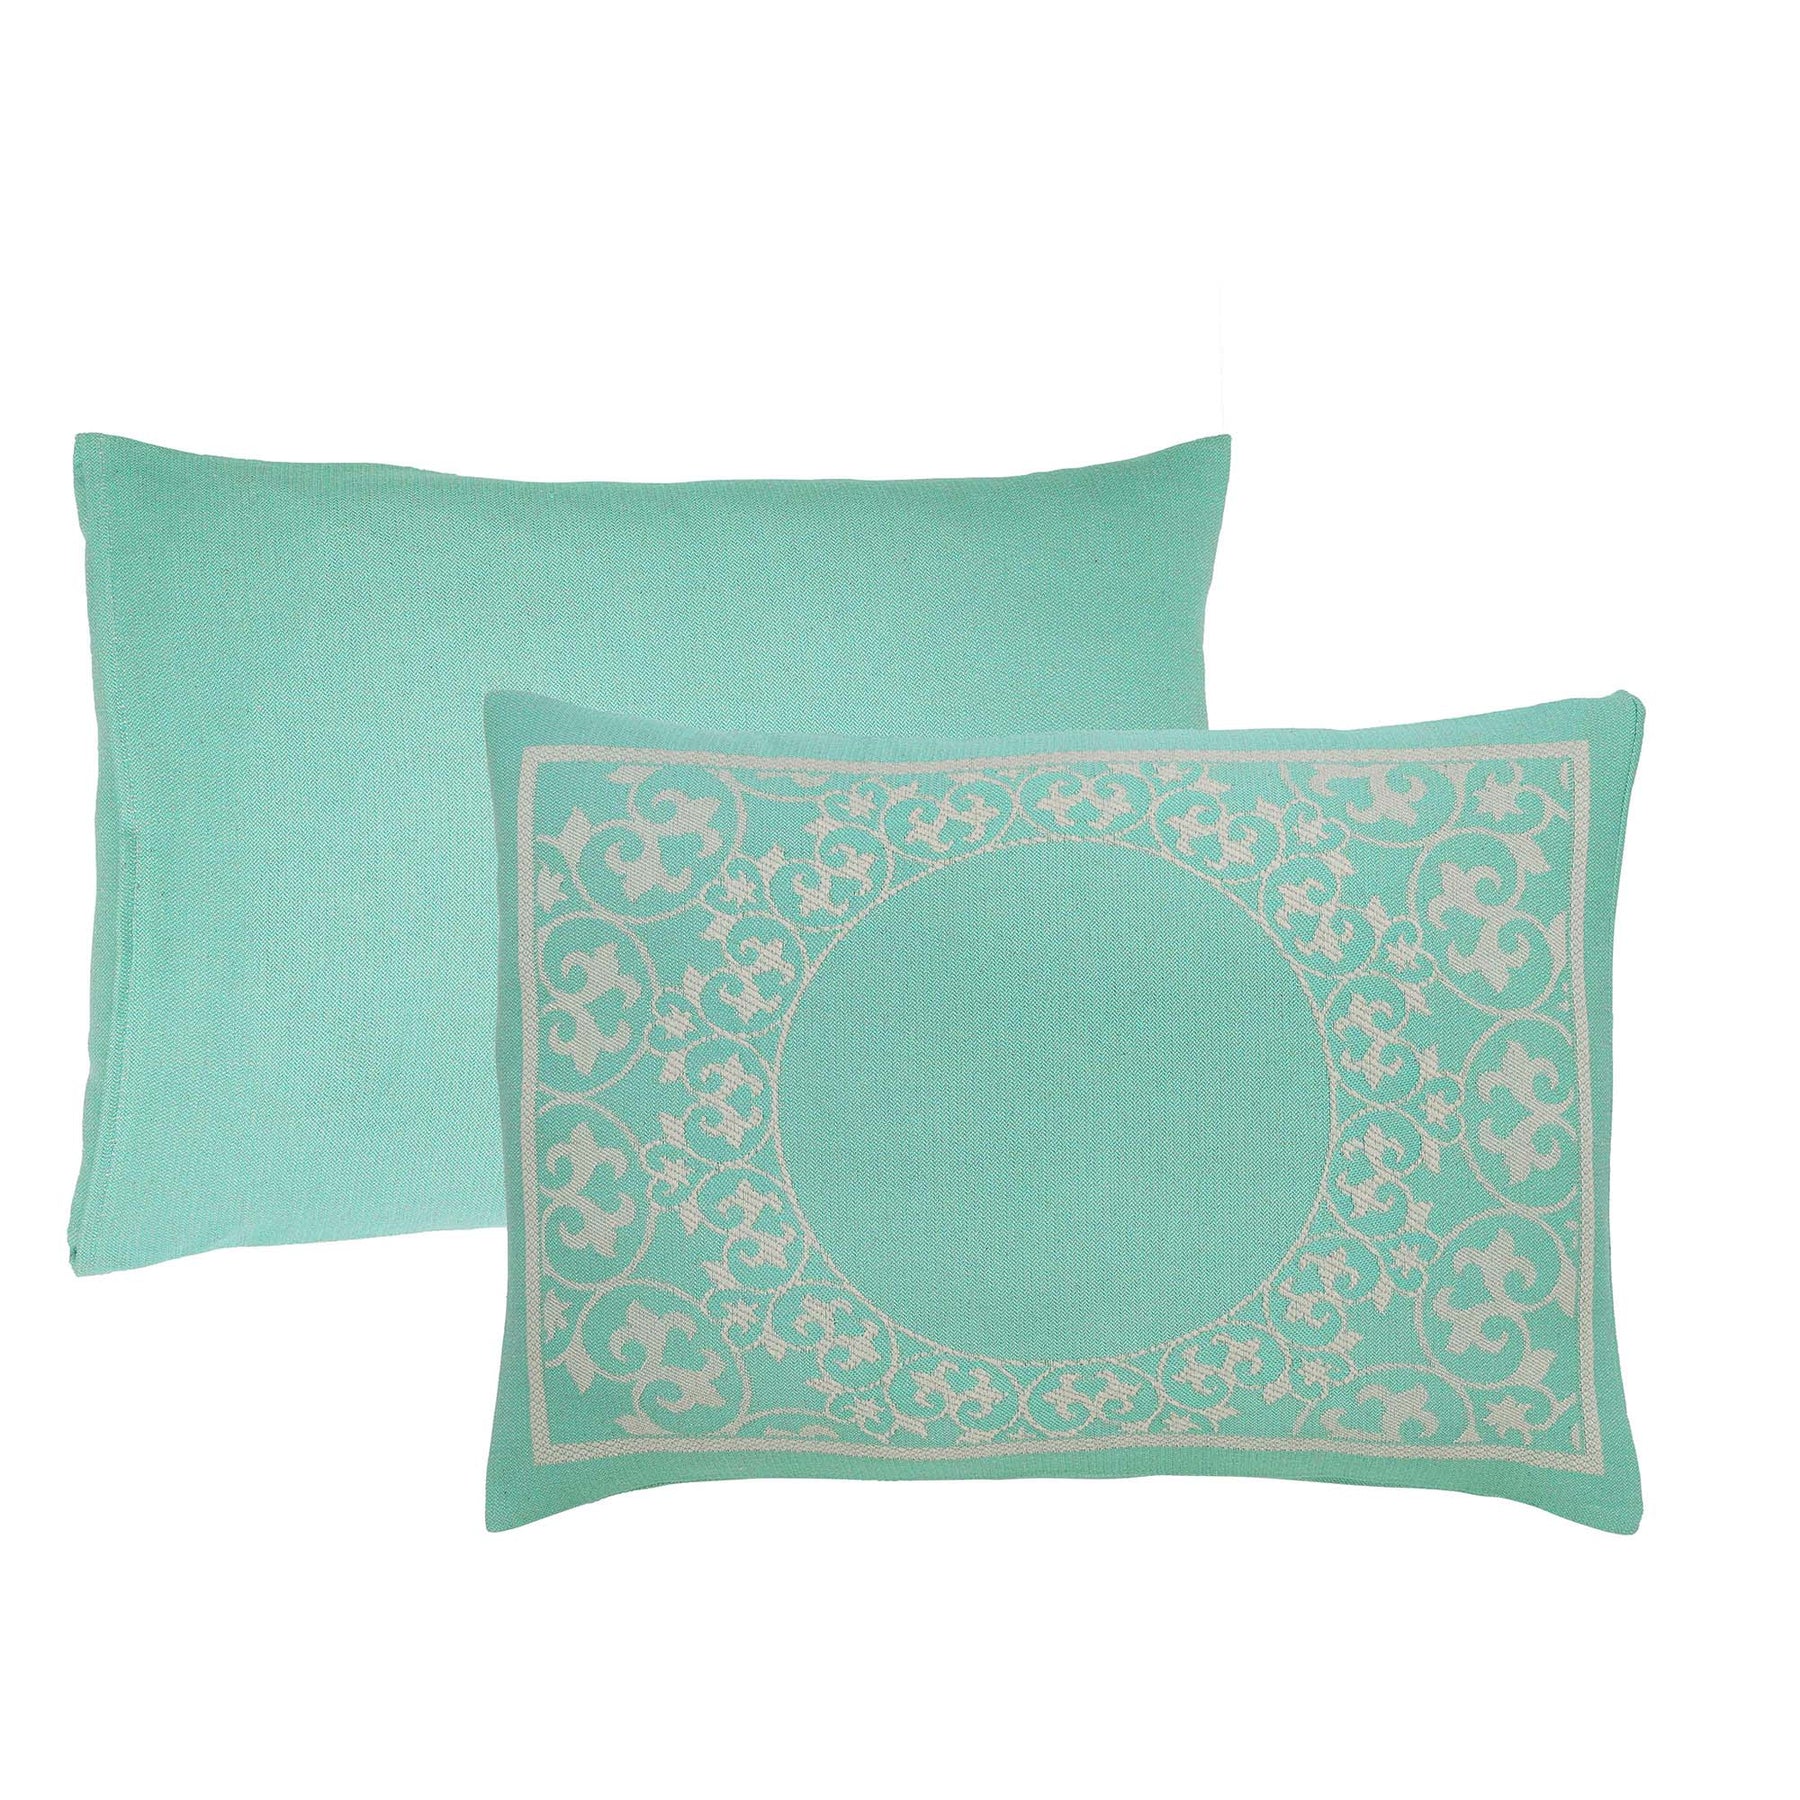 Superior Lyron Cotton Blend Woven Jacquard Vintage Floral Scroll Lightweight Bedspread and Sham Set - Turquoise